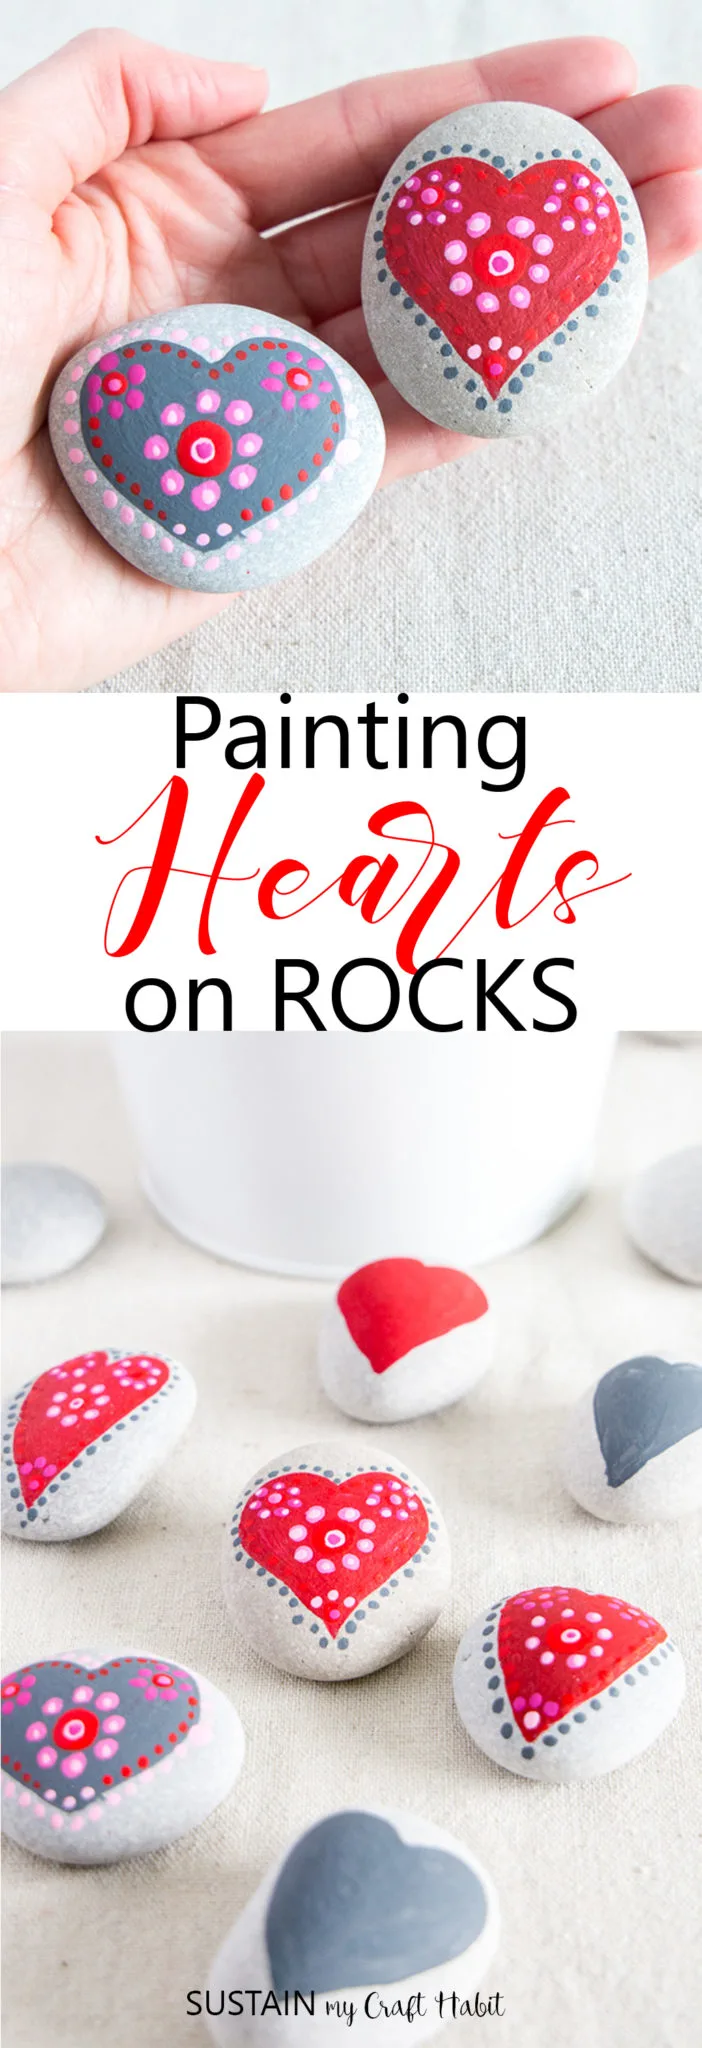 heart painting rocks